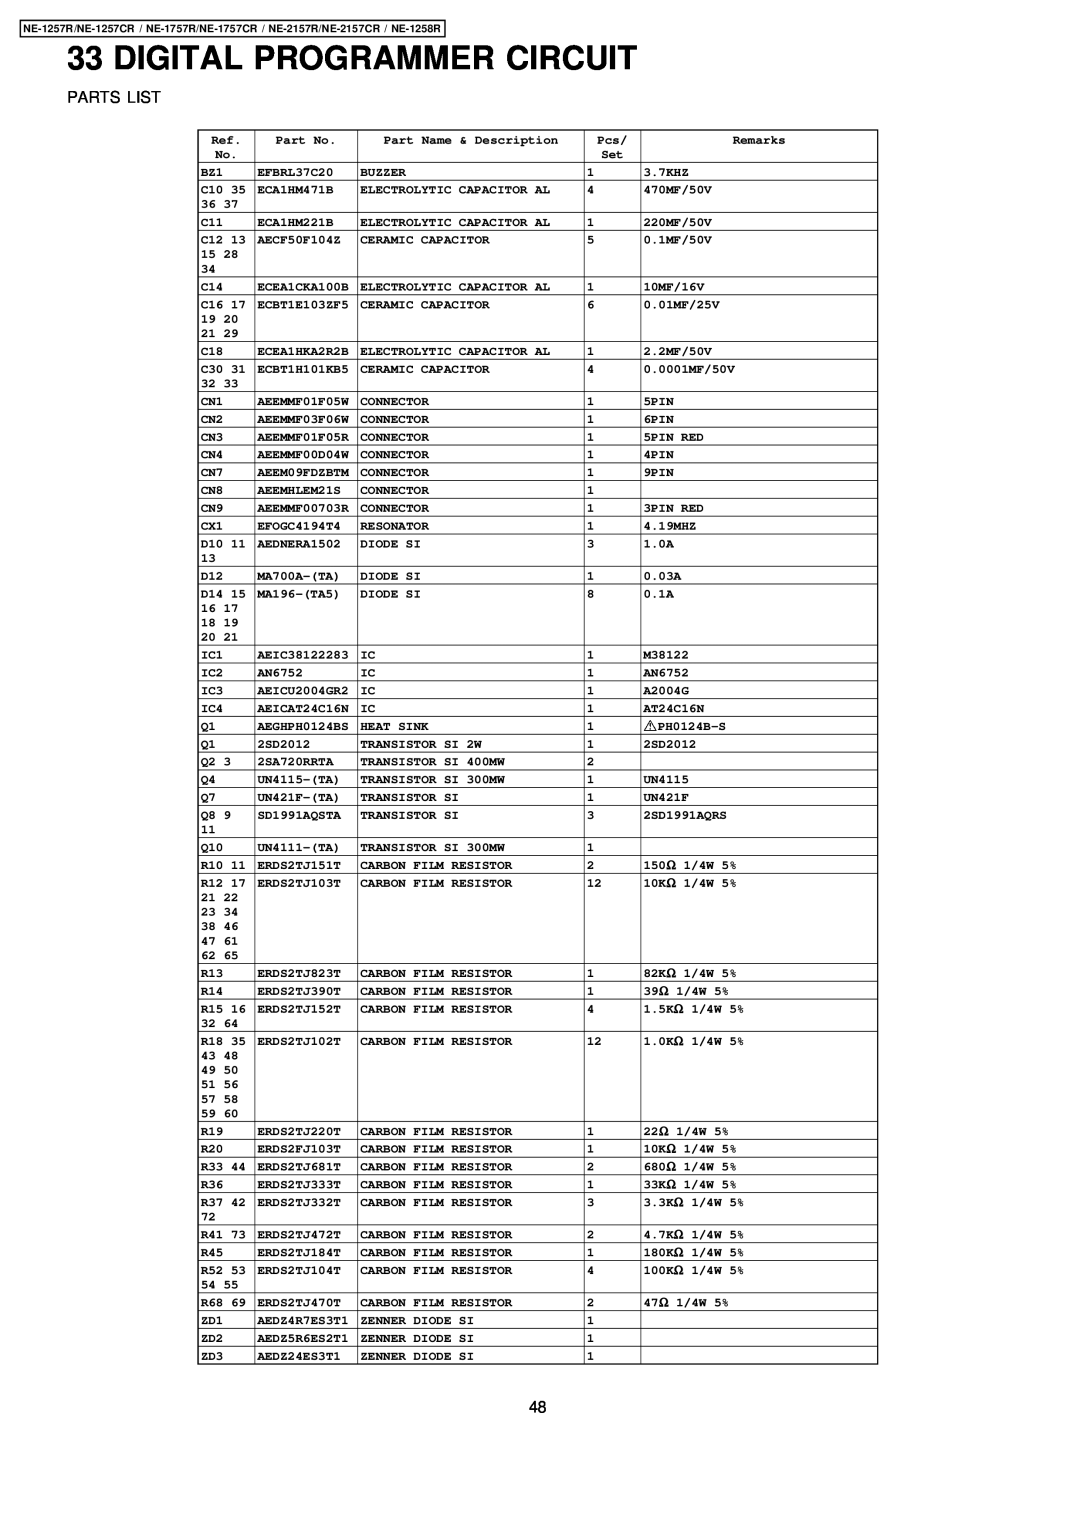 Panasonic NE-2157CR, NE-1757CR, NE-1257CR manual Digital Programmer Circuit, Parts List 